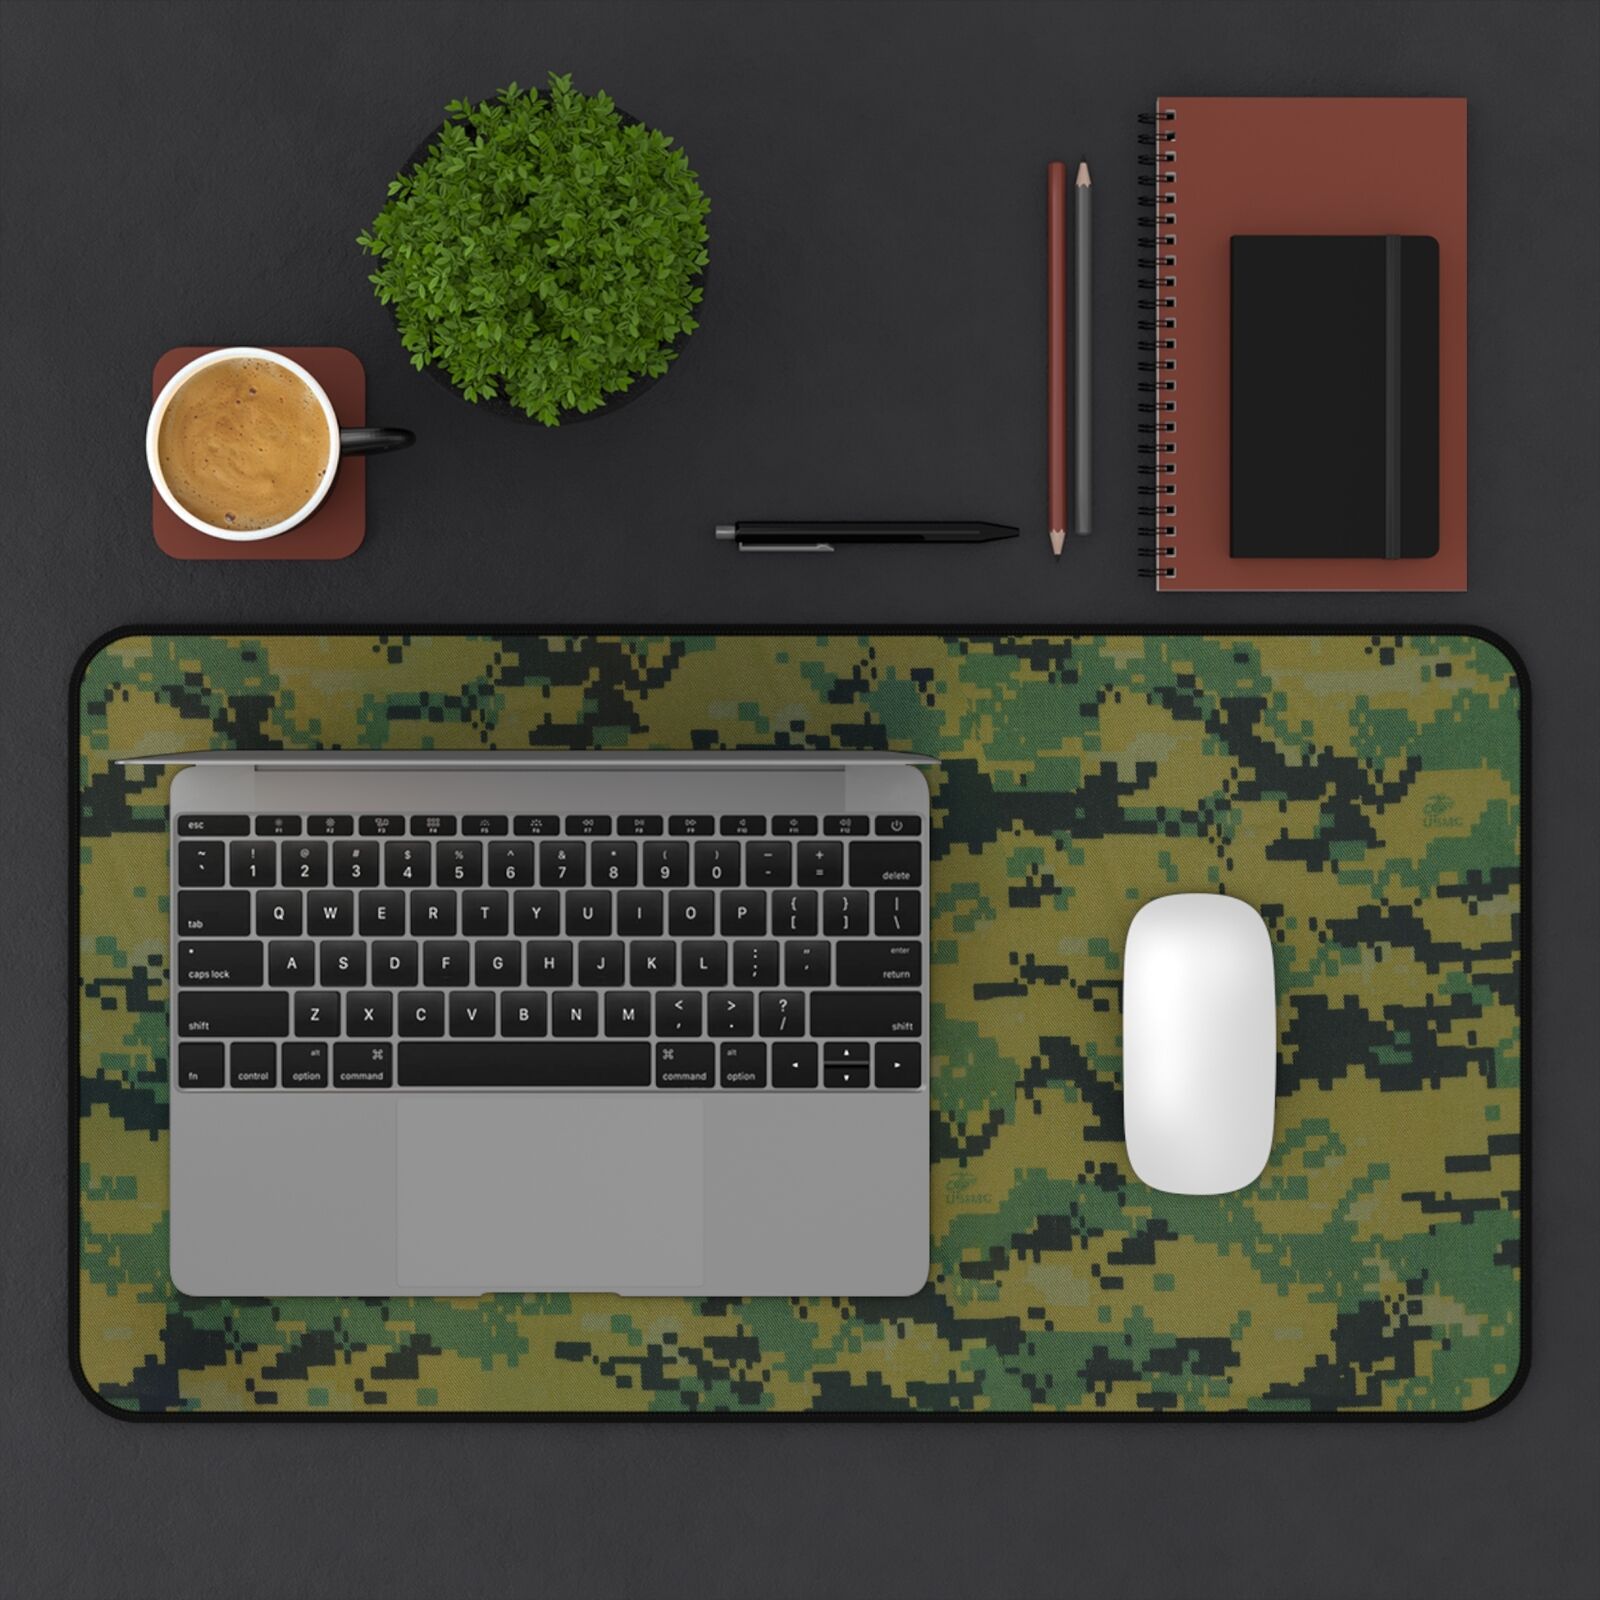 USMC Marines Marpat Camo Design - Premium Quality Desk Mat Mouse Pad